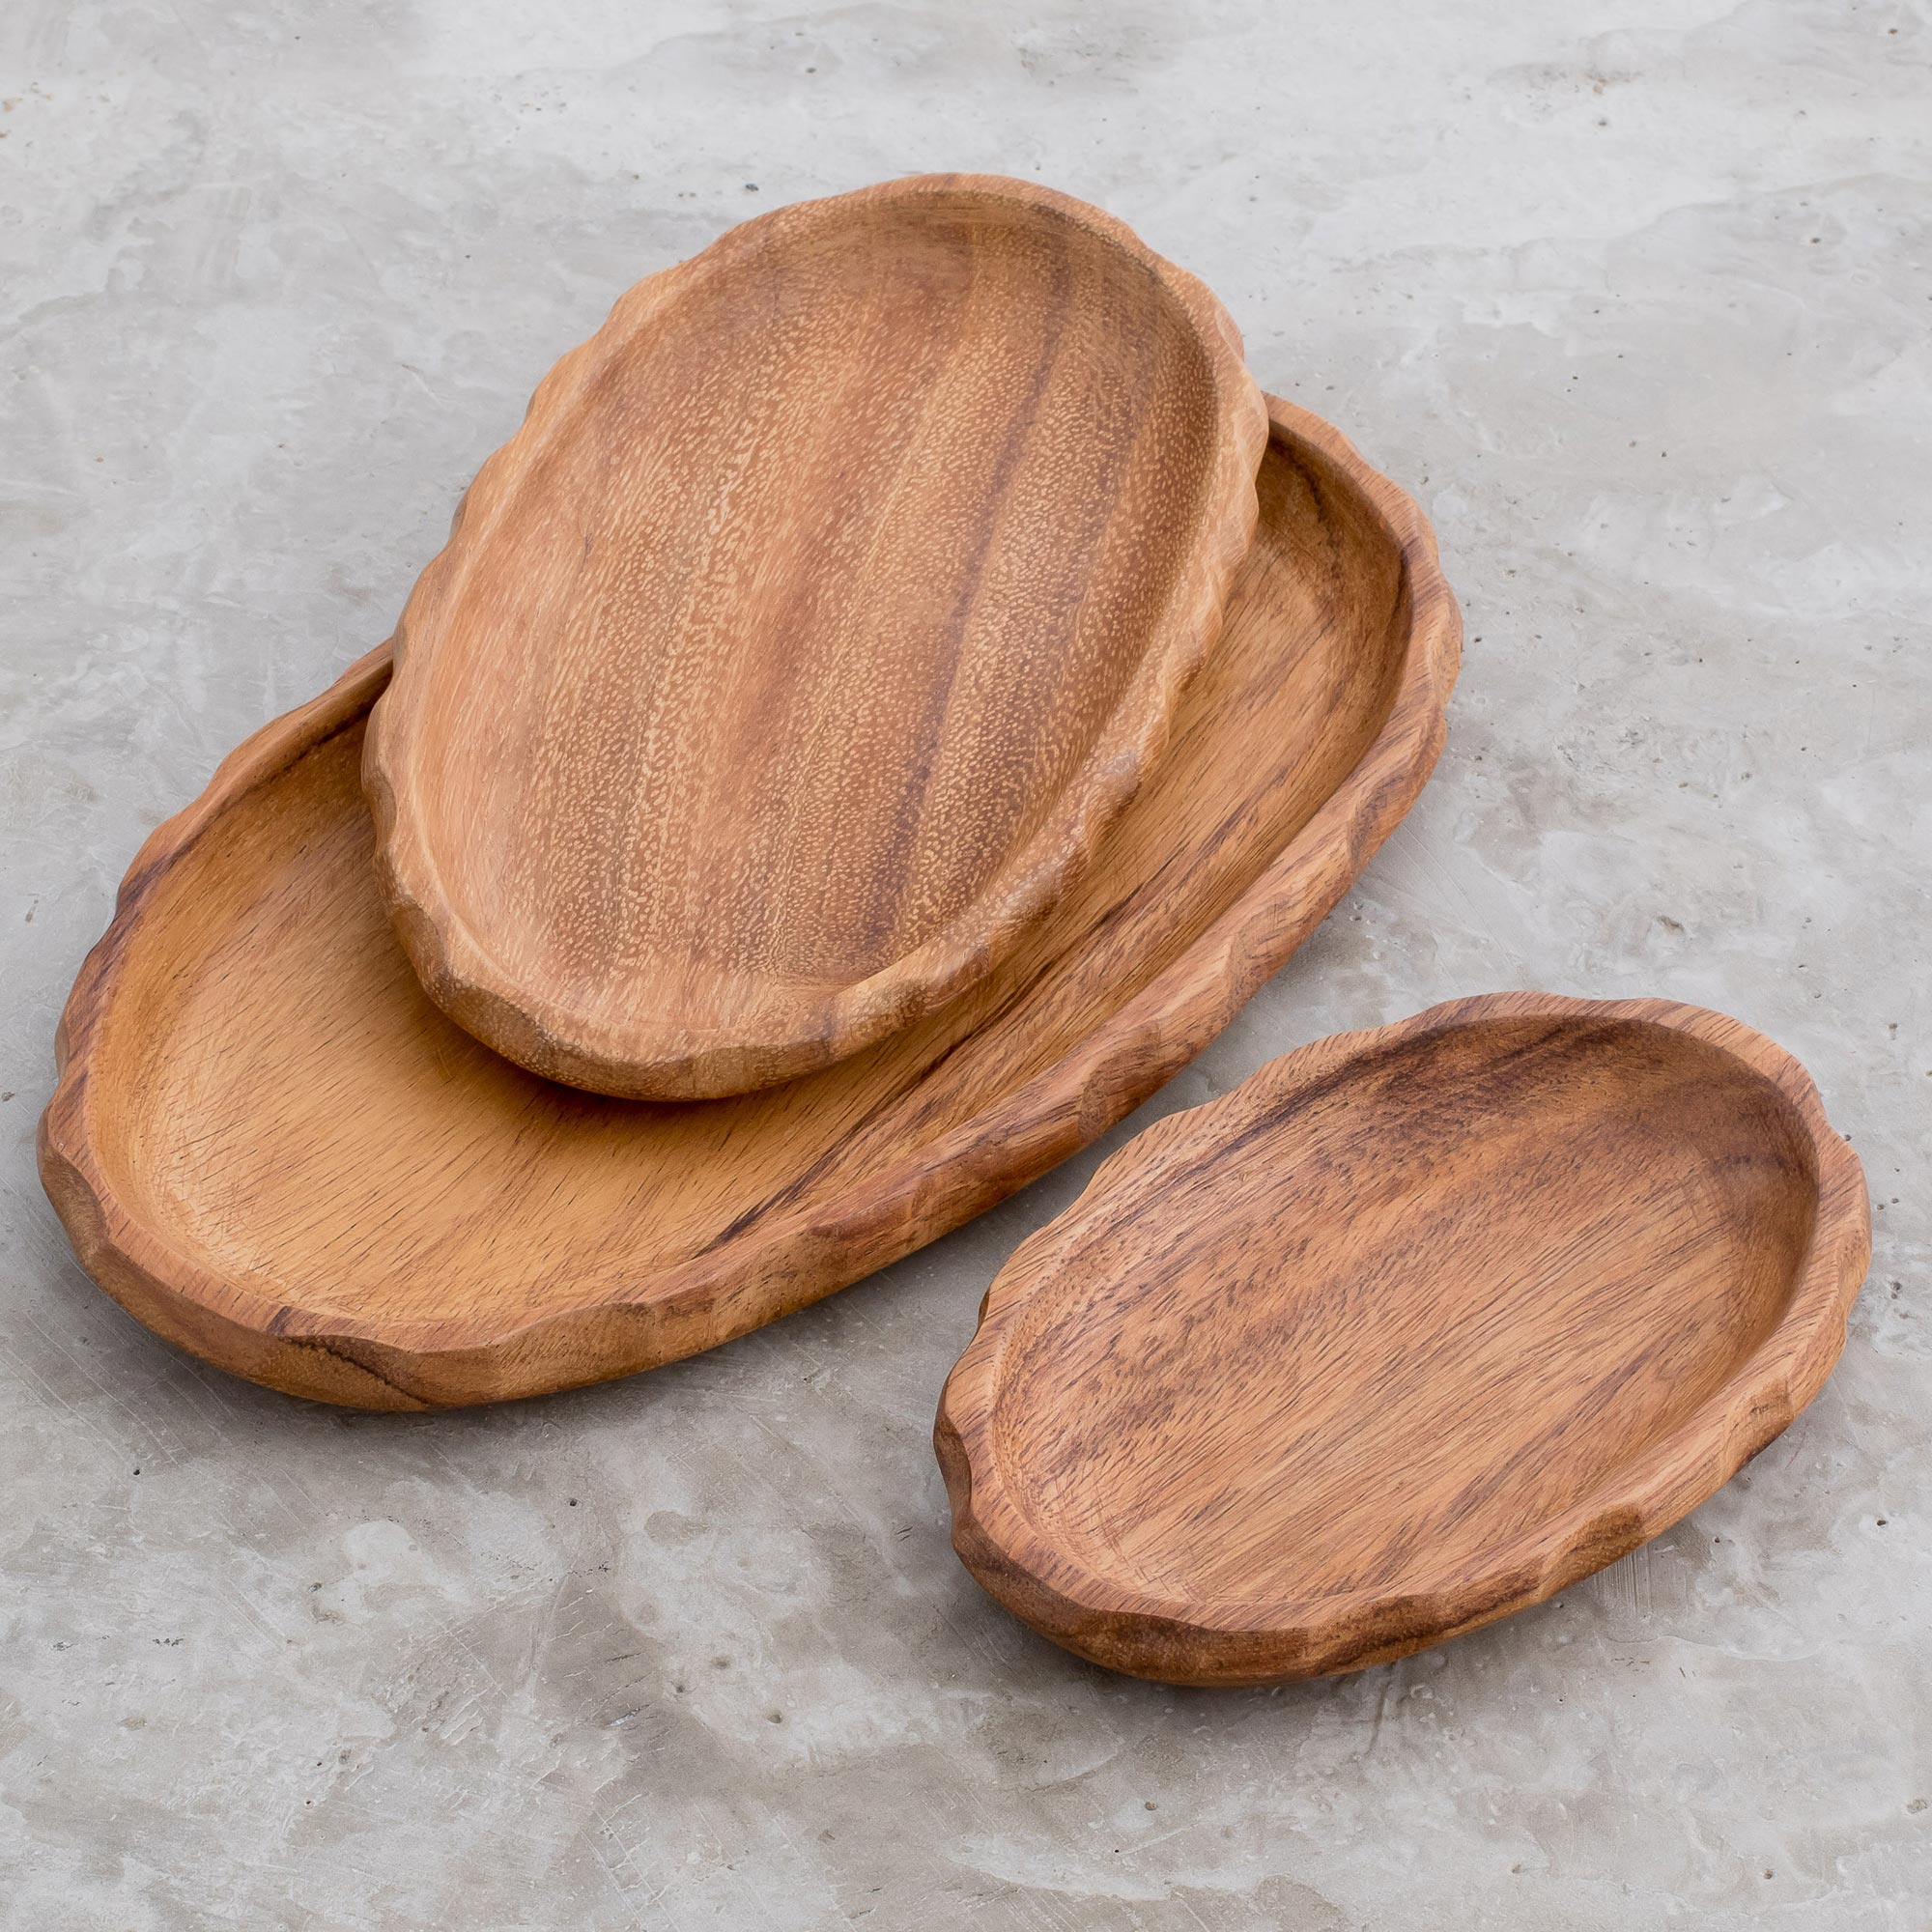 Conacaste Wood Platters from Guatemala (Set of 3) - Jocoteca Food | NOVICA